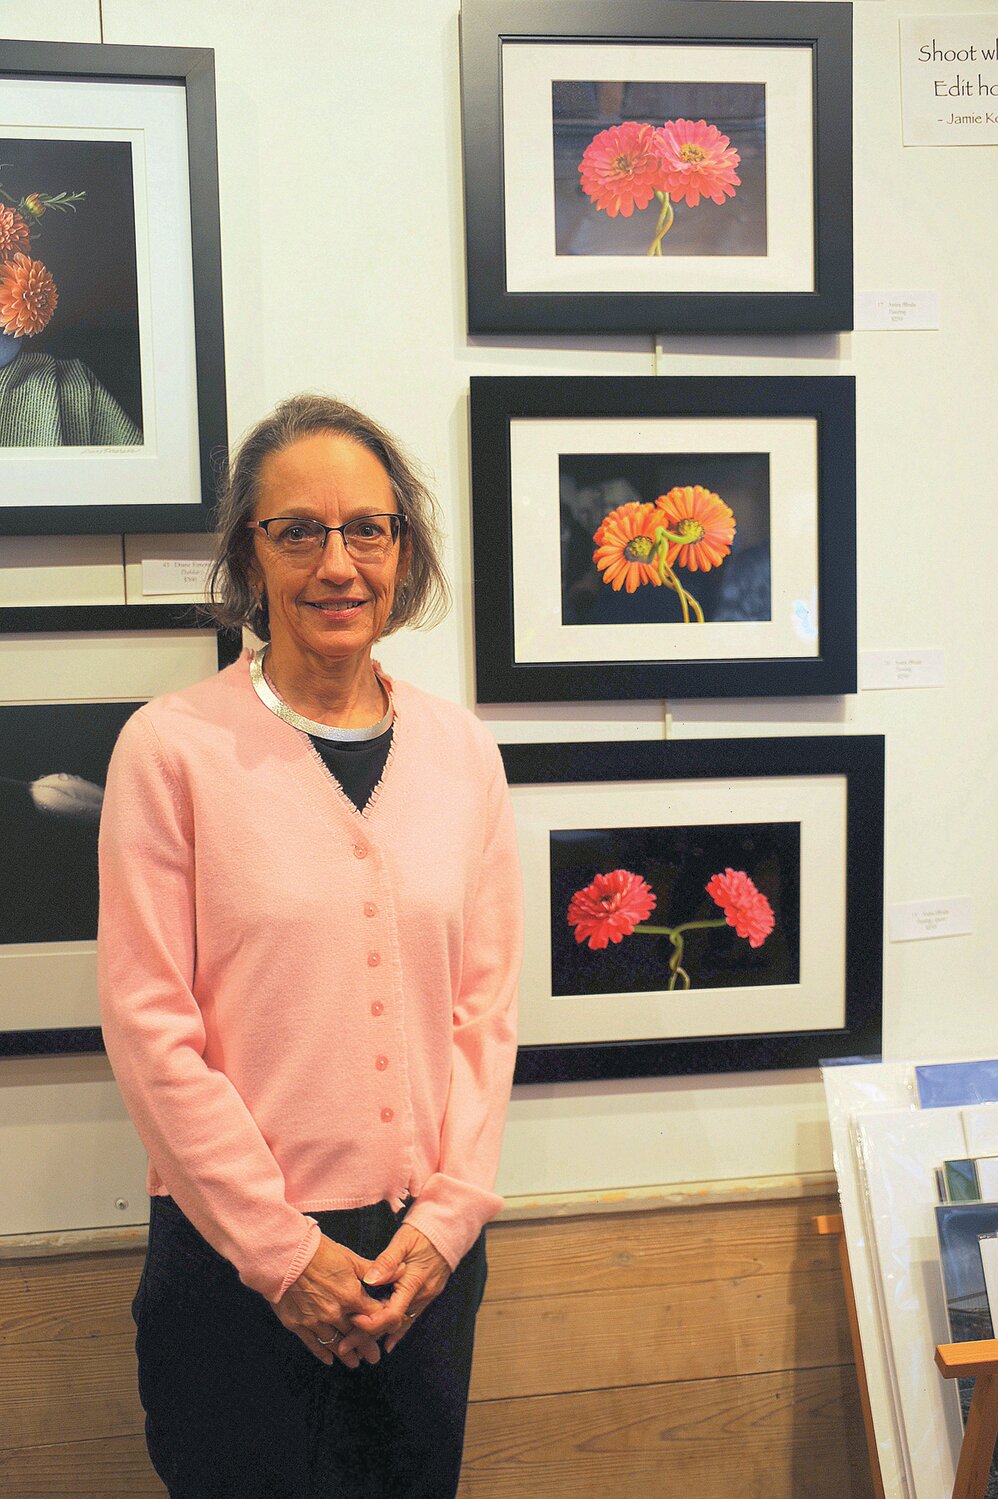 Anita Bhala standing next to her Zinnia photographs. “Turning” won the Abstract Award.